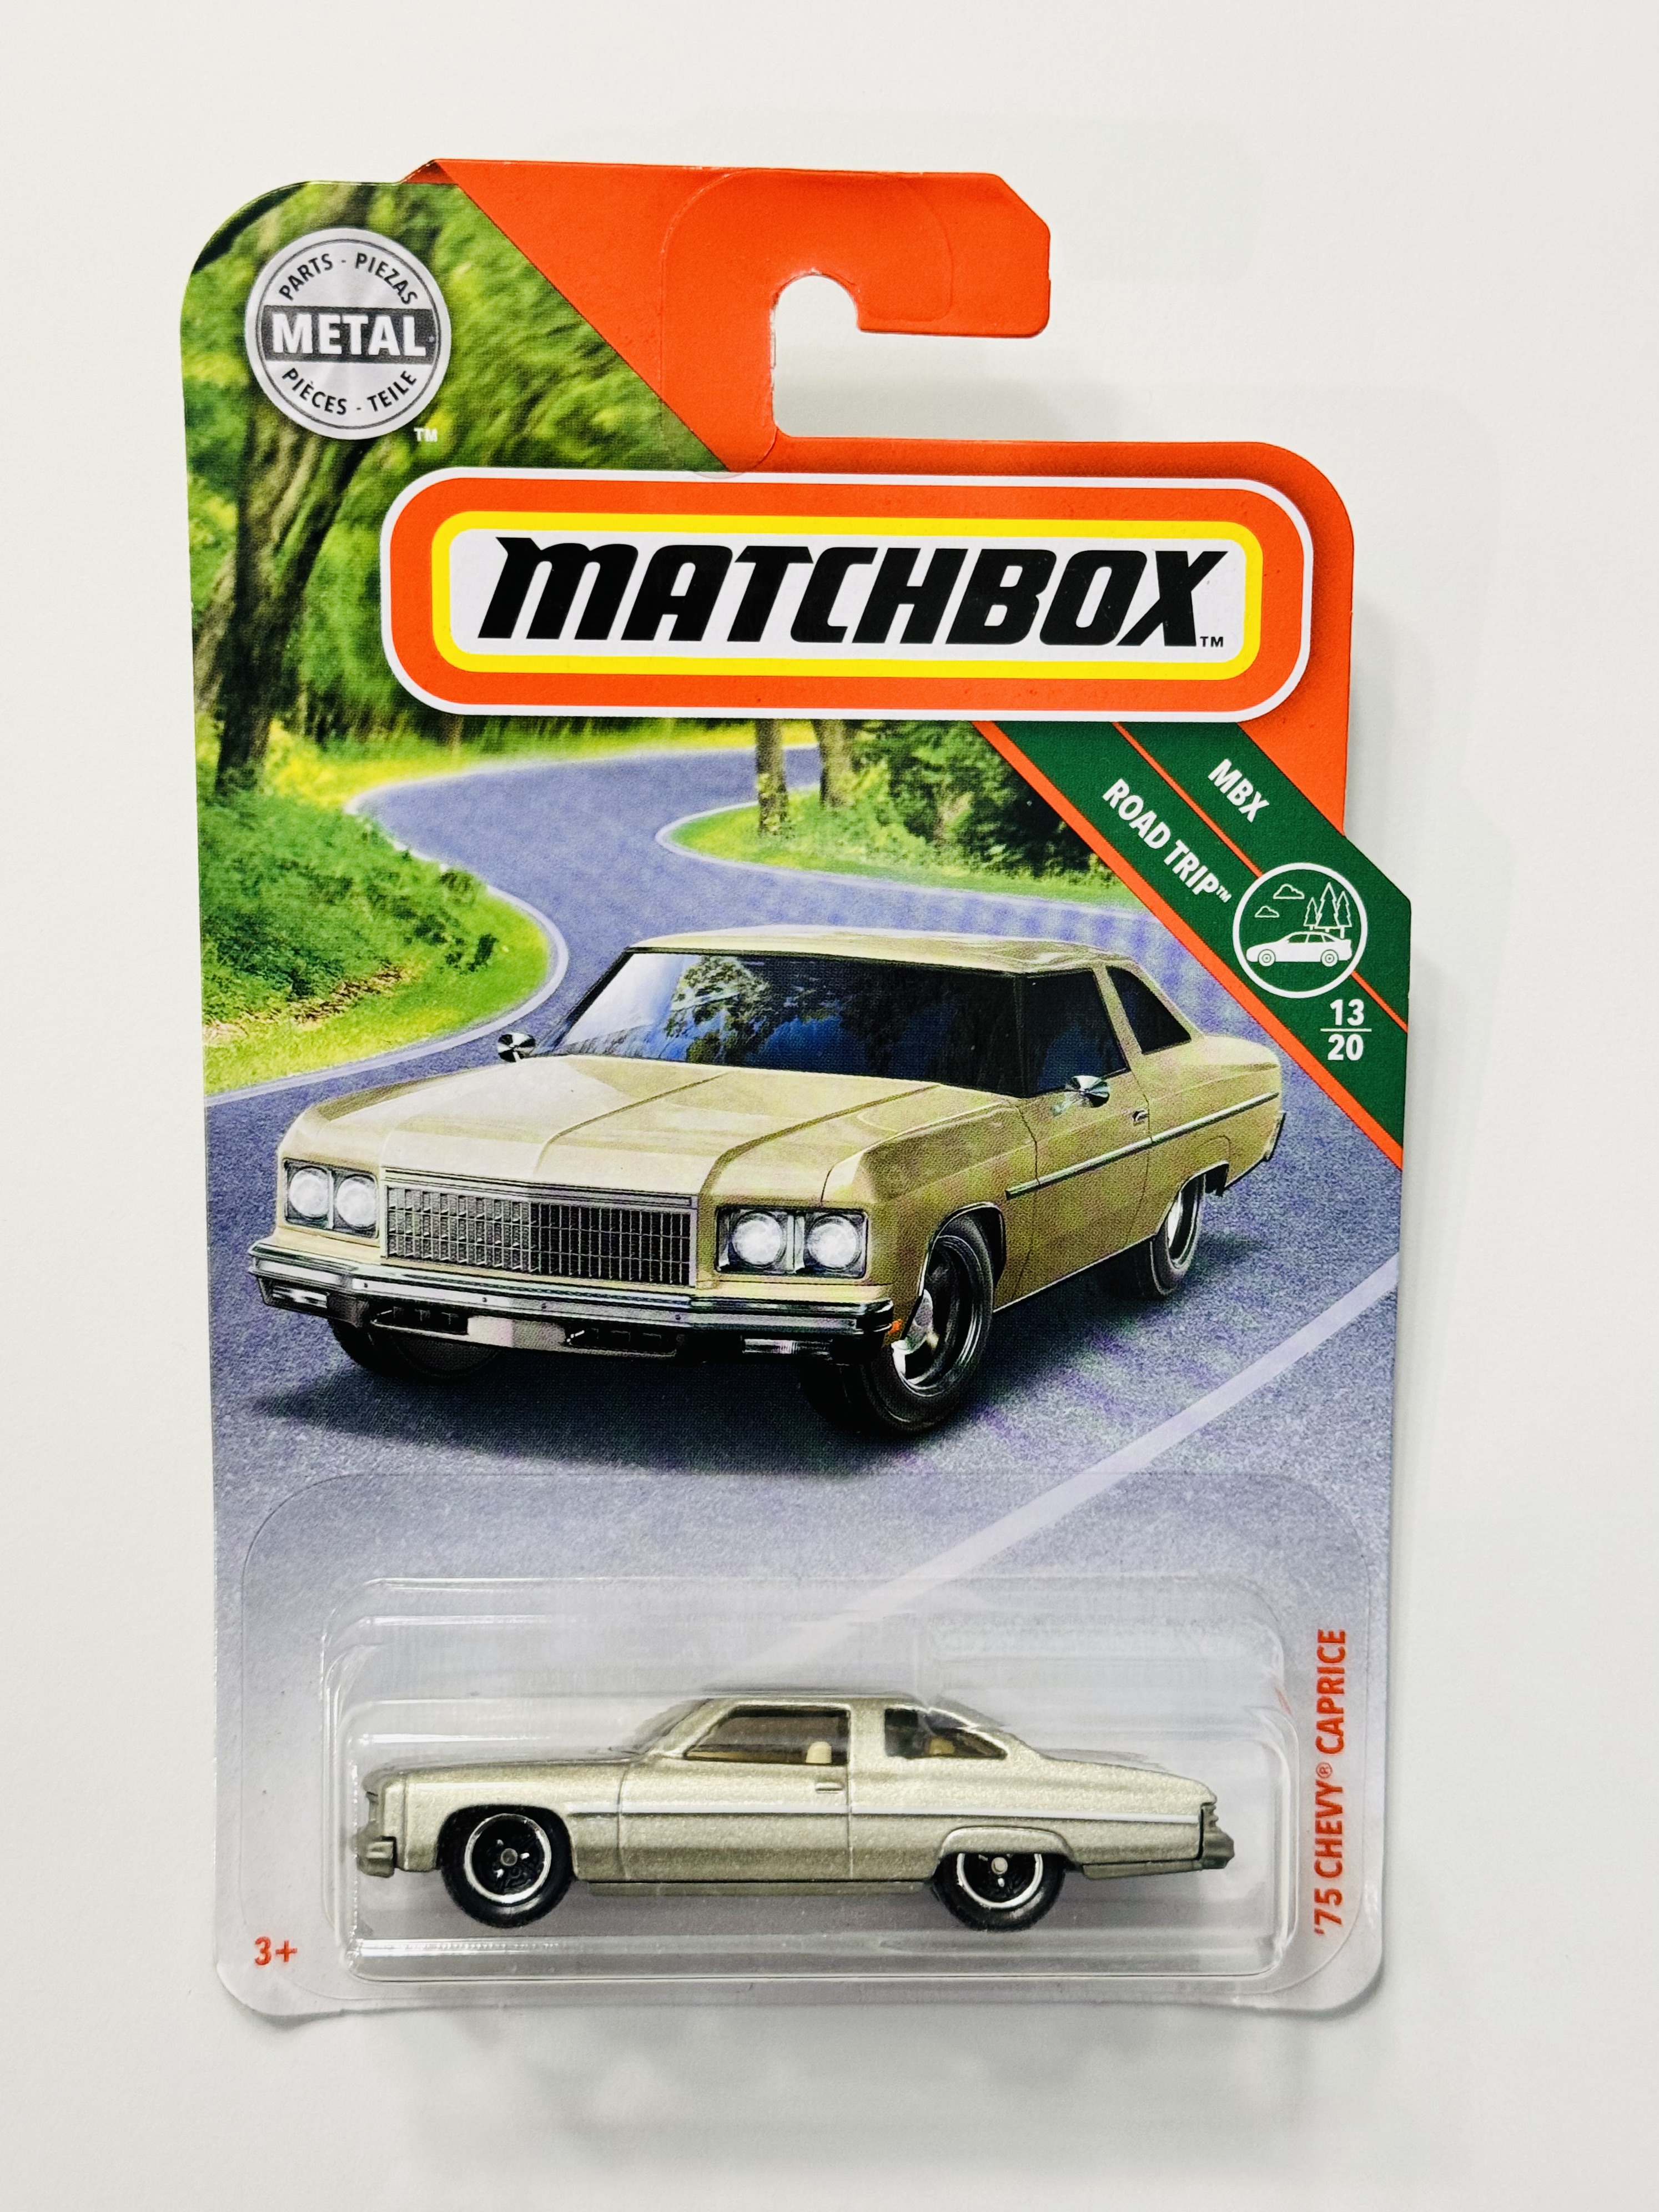 Matchbox #13 '75 Chevy Caprice